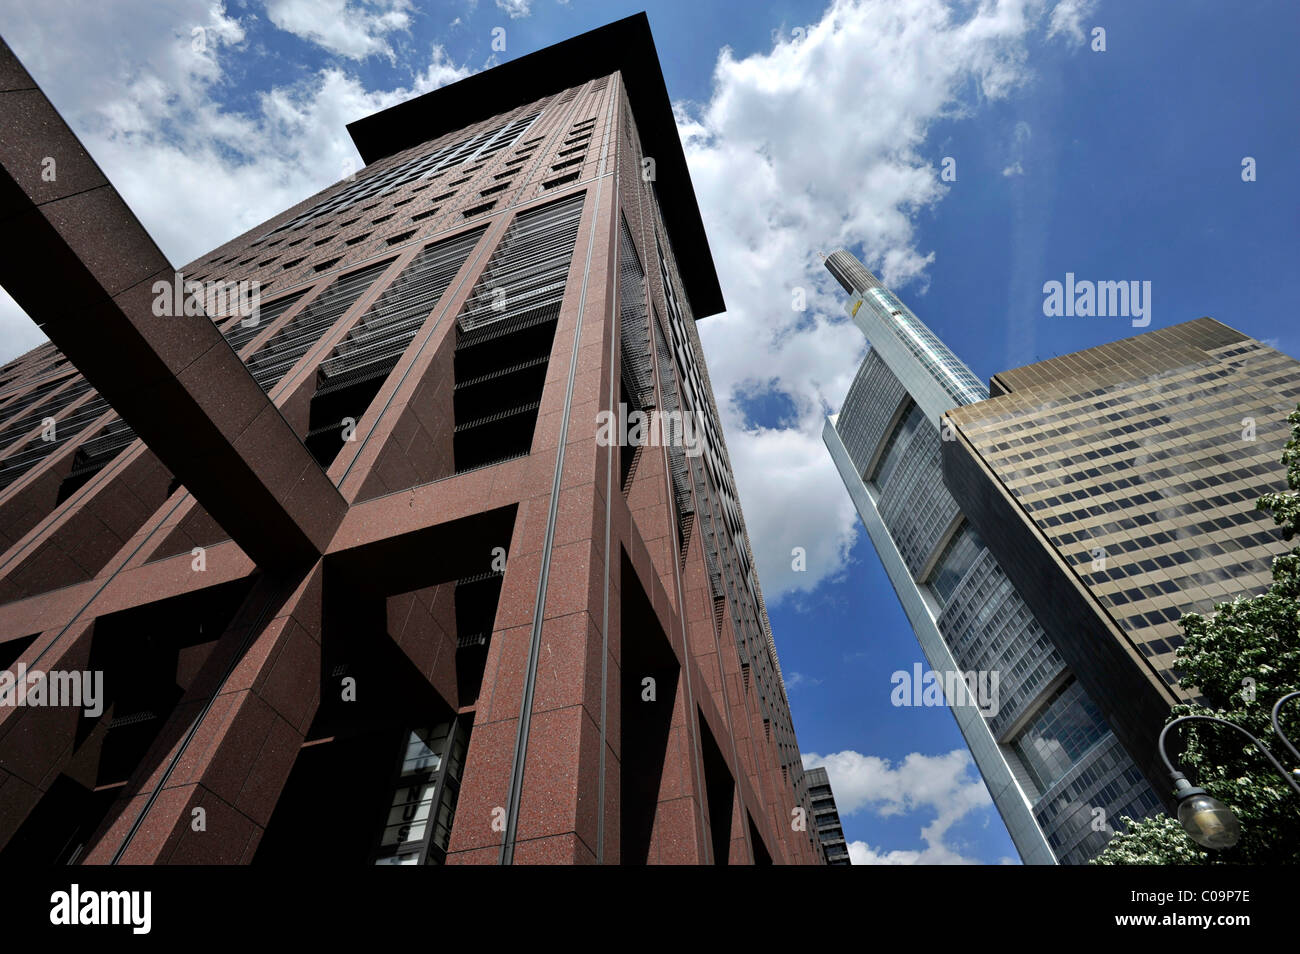 Japan Center, Commerzbank headquarters, Financial District, Frankfurt am Main, Hesse, Germany, Europe Stock Photo